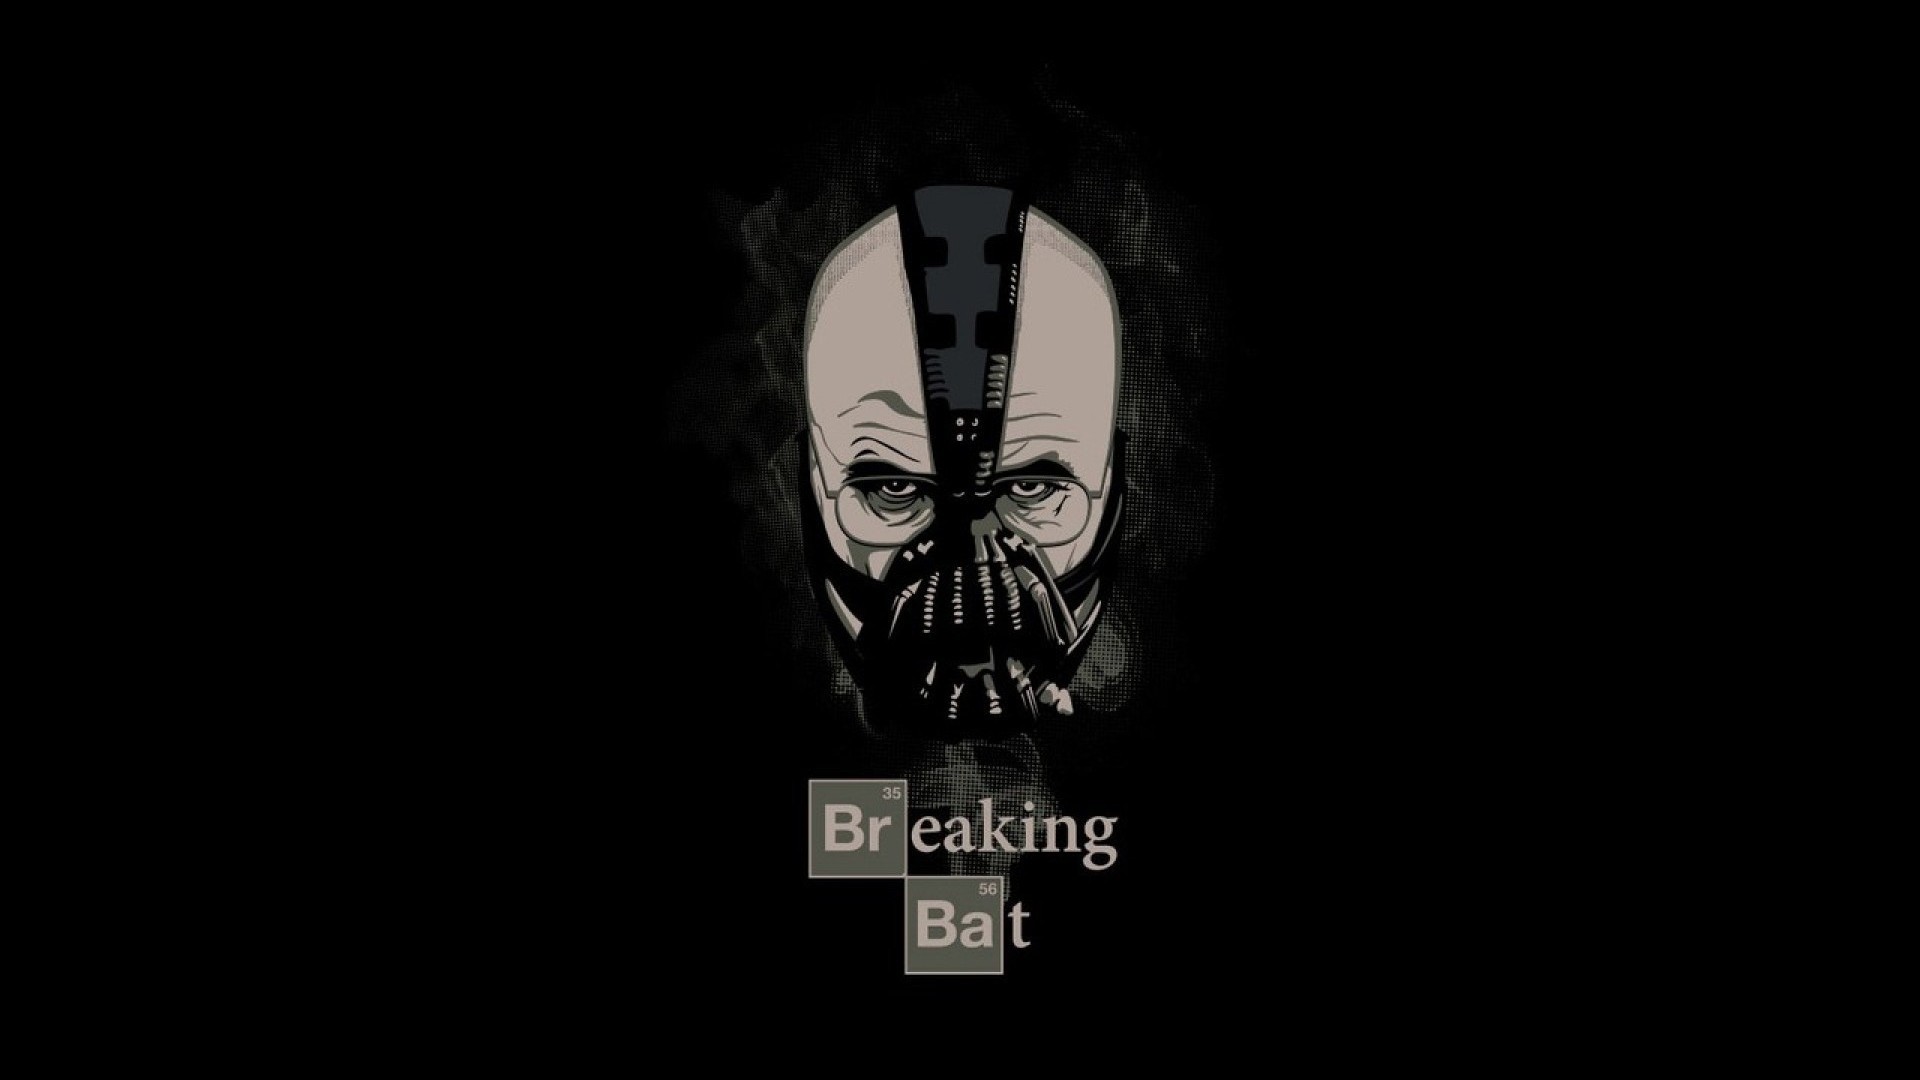 Bane The Dark Knight Movies Crossover Breaking Bad Artwork 1920x1080